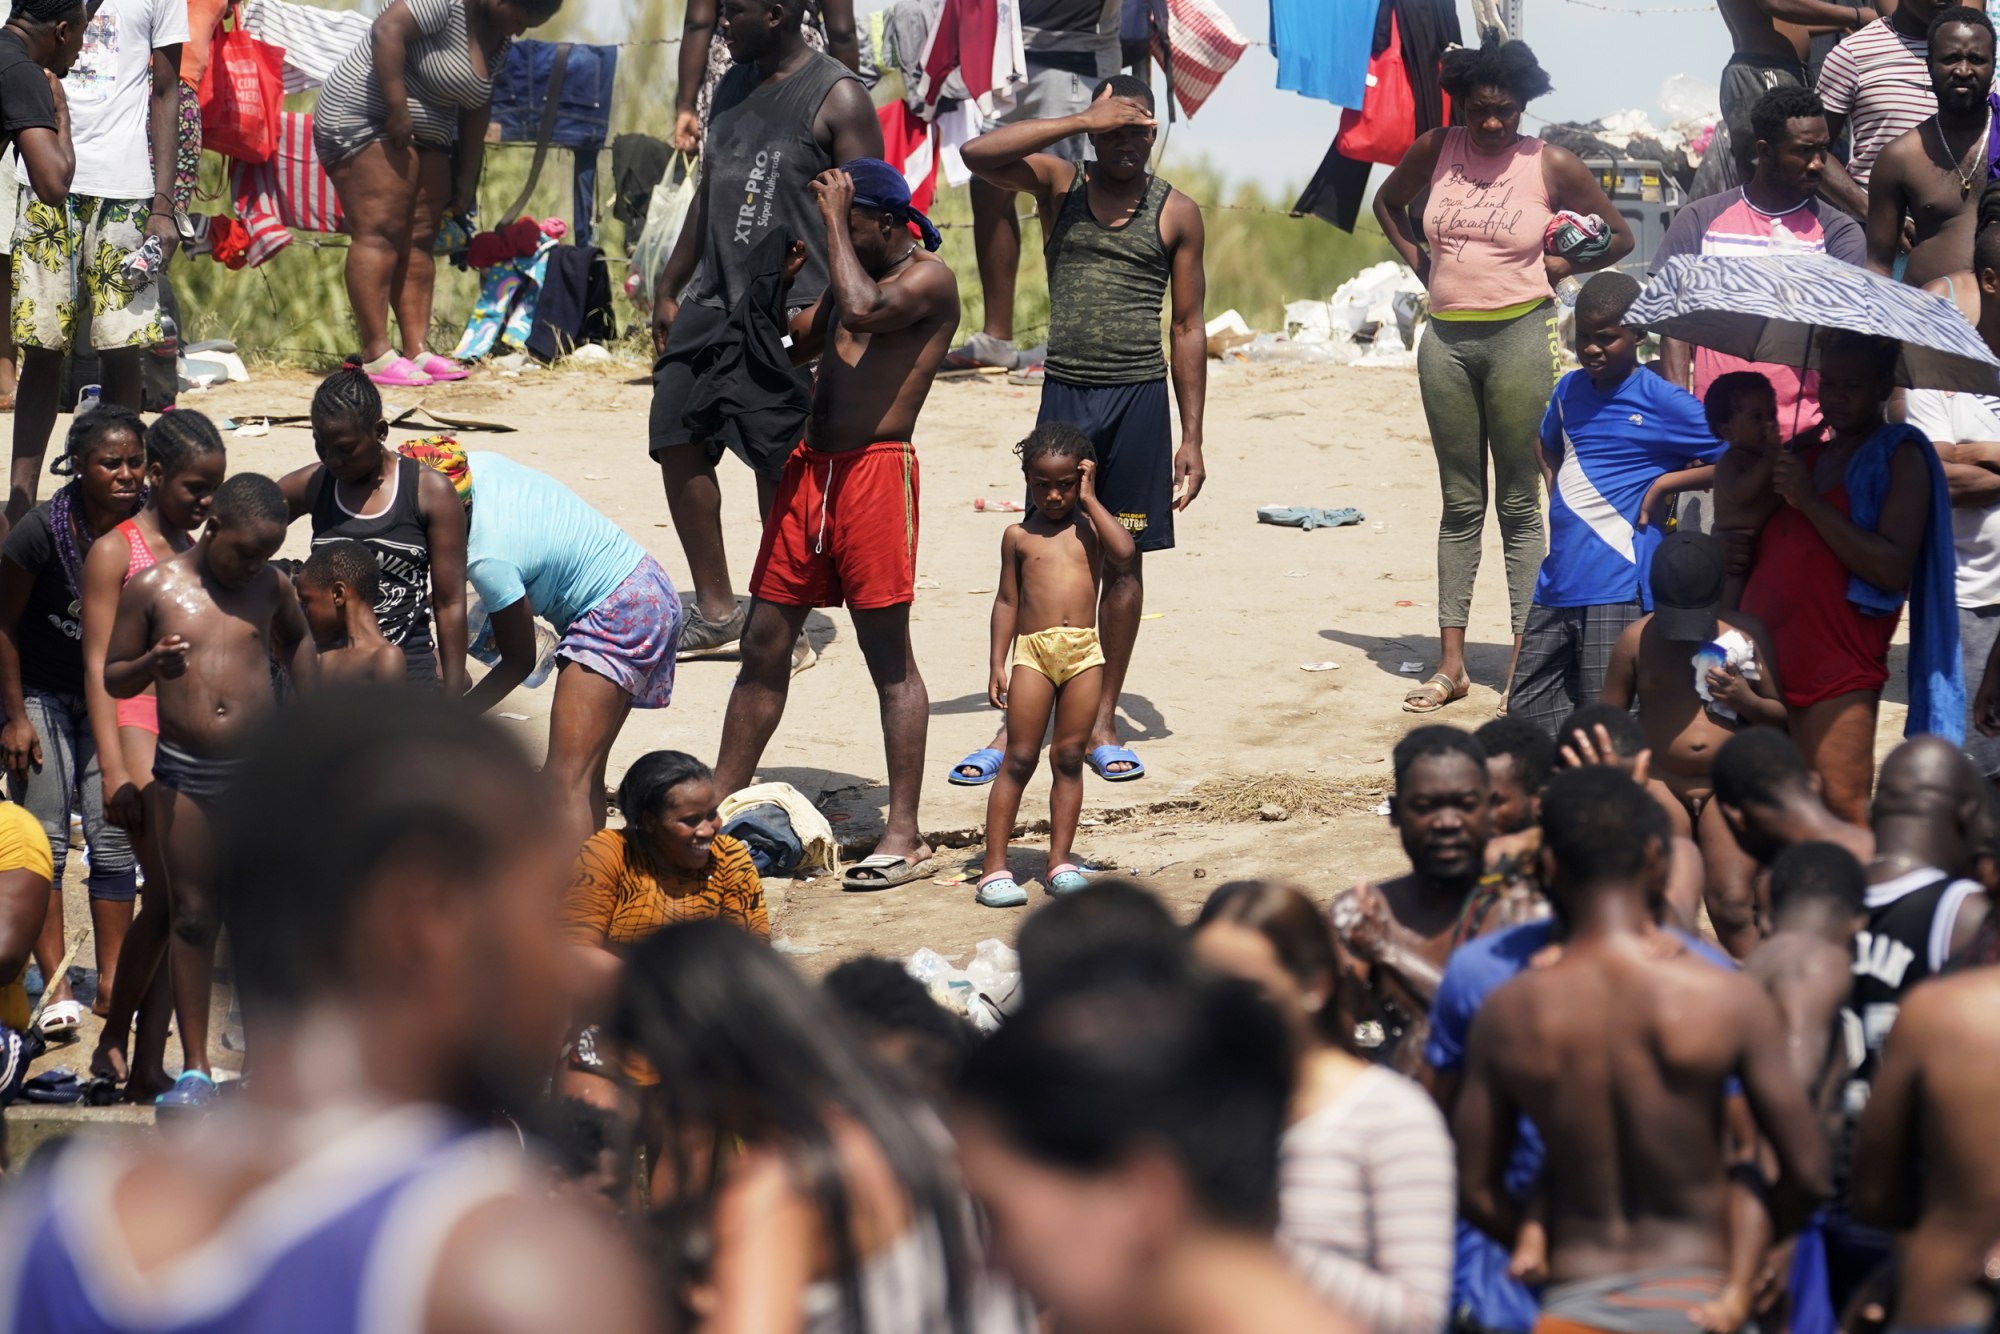 U.S. Blocks Part of Texas-Mexico Border, Begins Flying Haitians Home After Thousands Set Up Camp Under Bridge